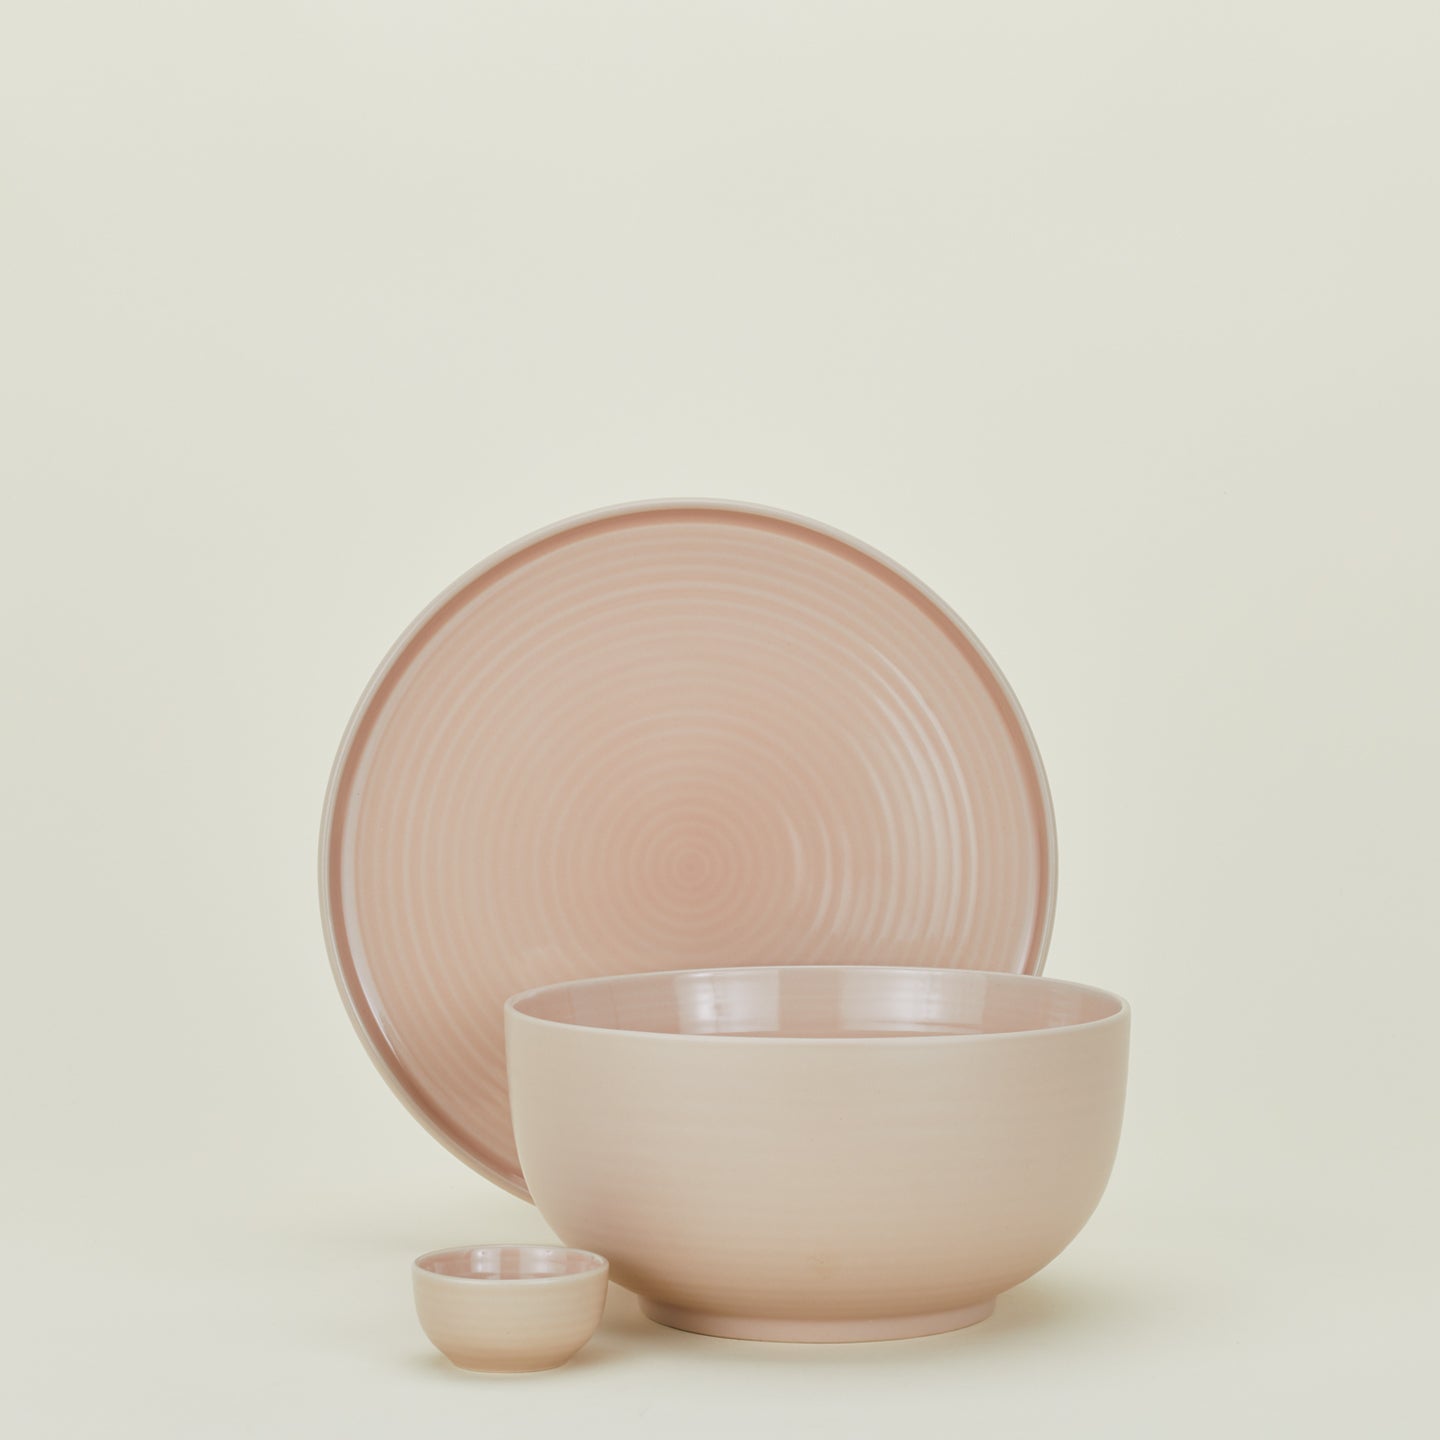 Minimalist ceramic tableware set in pale pinkish beige exudes elegance.